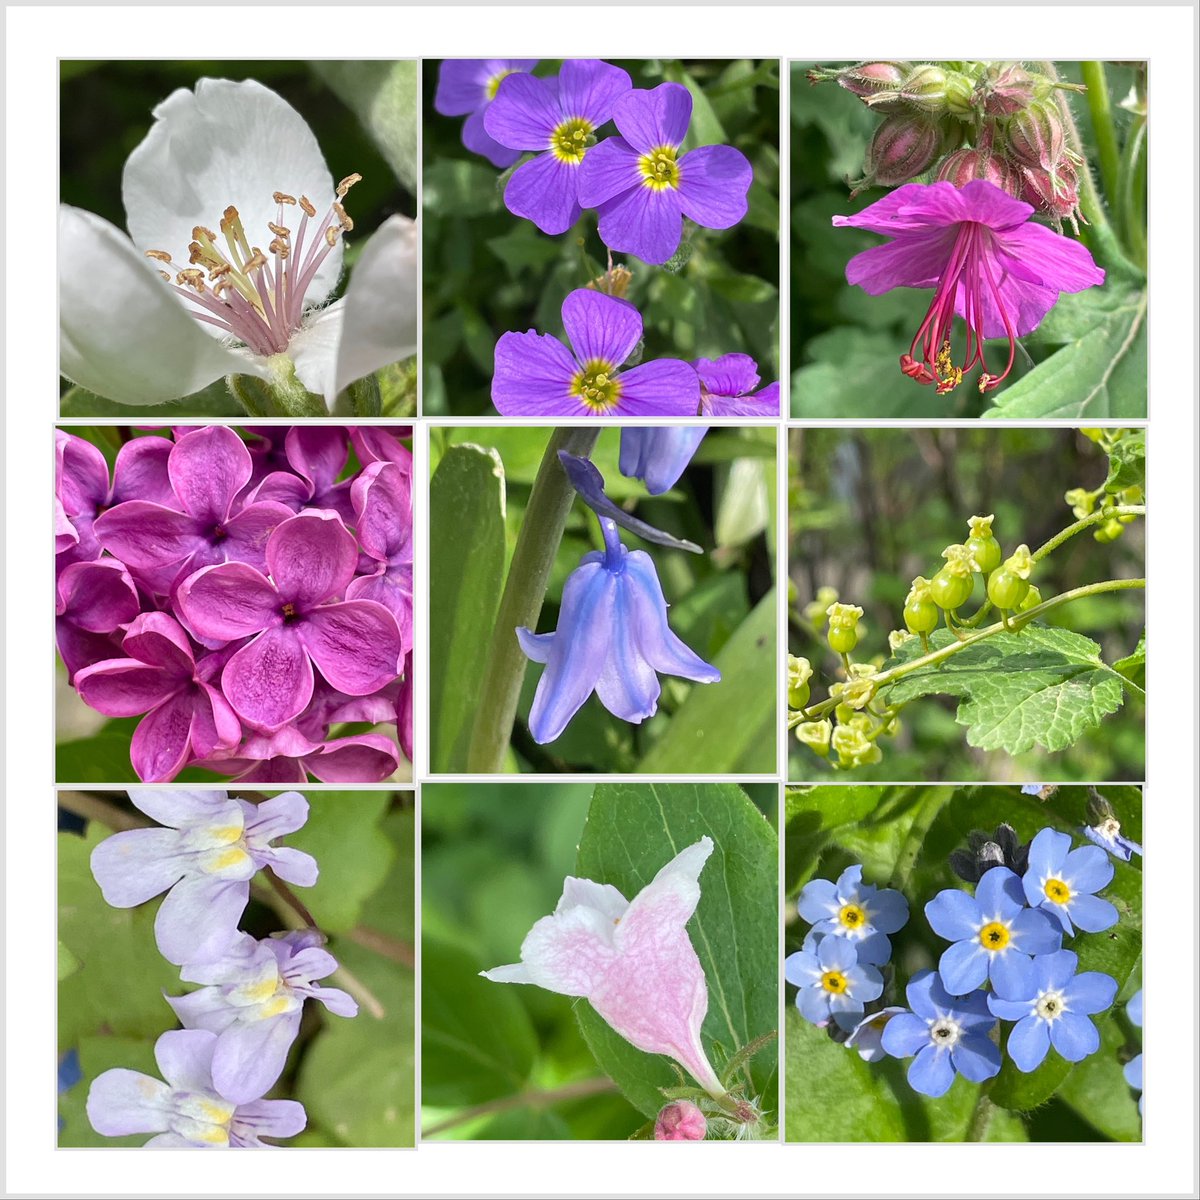 Spring has finally arrived! #Frühling #spring #flowers #flowerphotography #Gartensaison #gardening